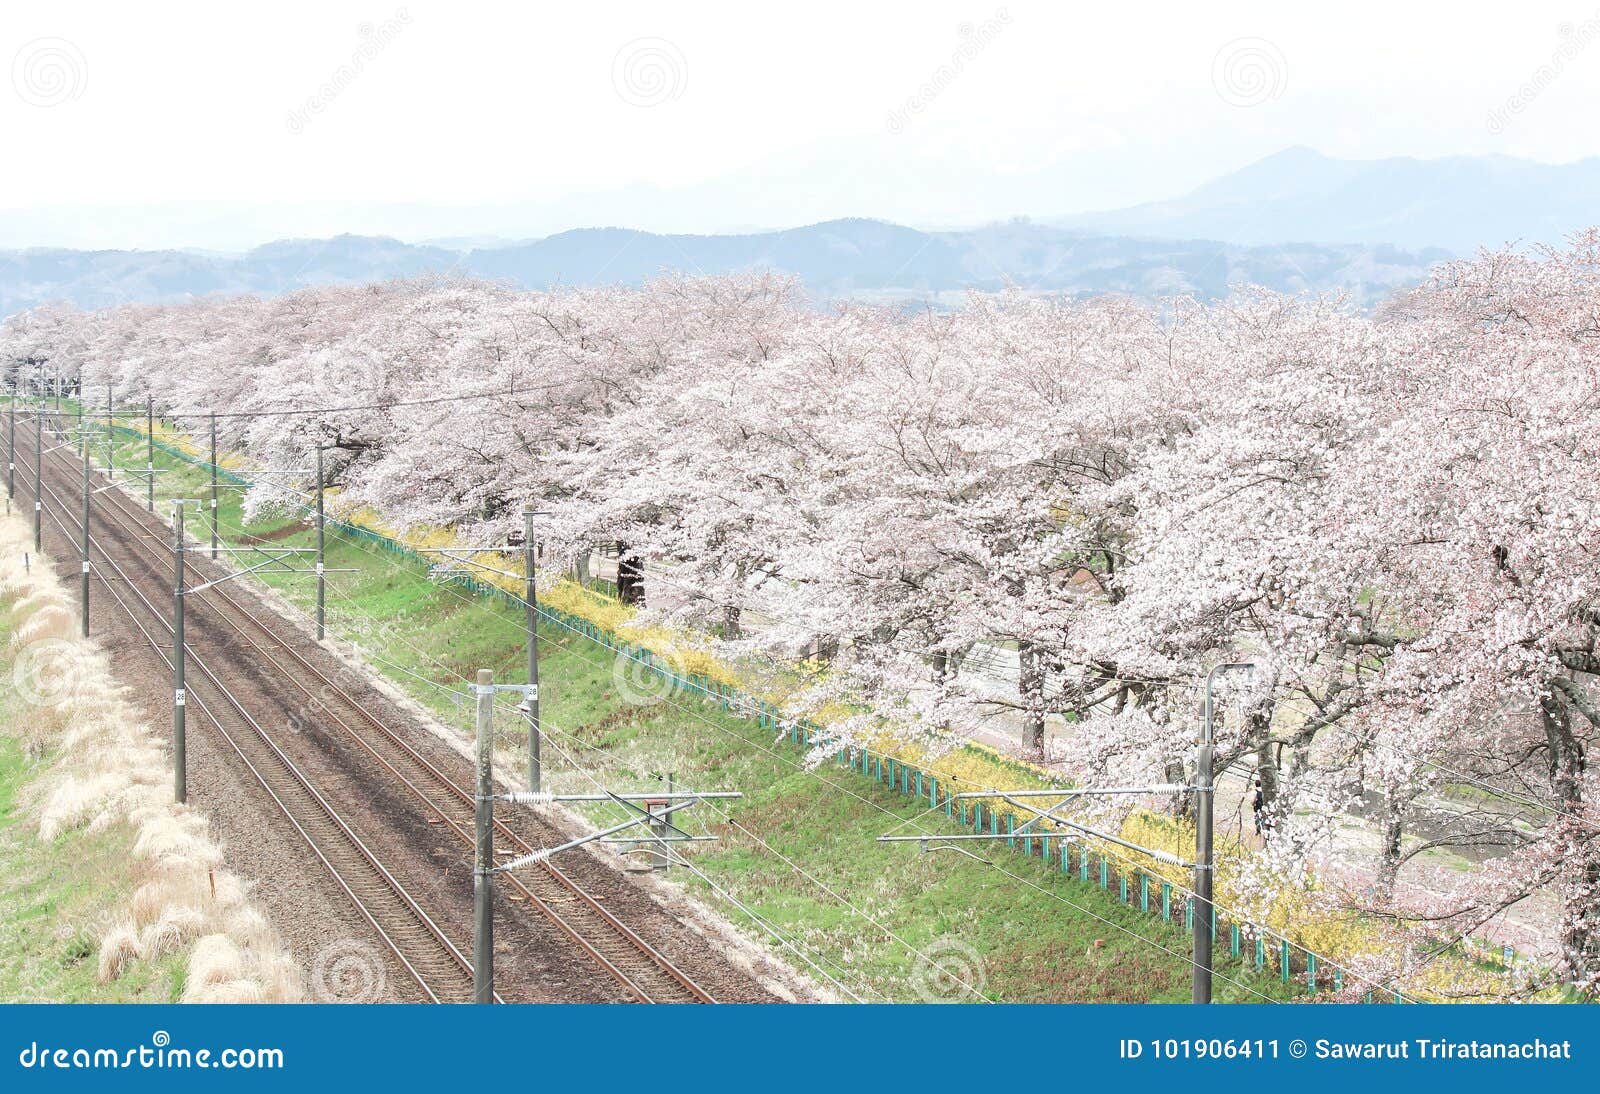 cherry blossoms and railways in hitome senbonzakurathousand cherry trees at sight at shiroishi riverside seen from shibata seno